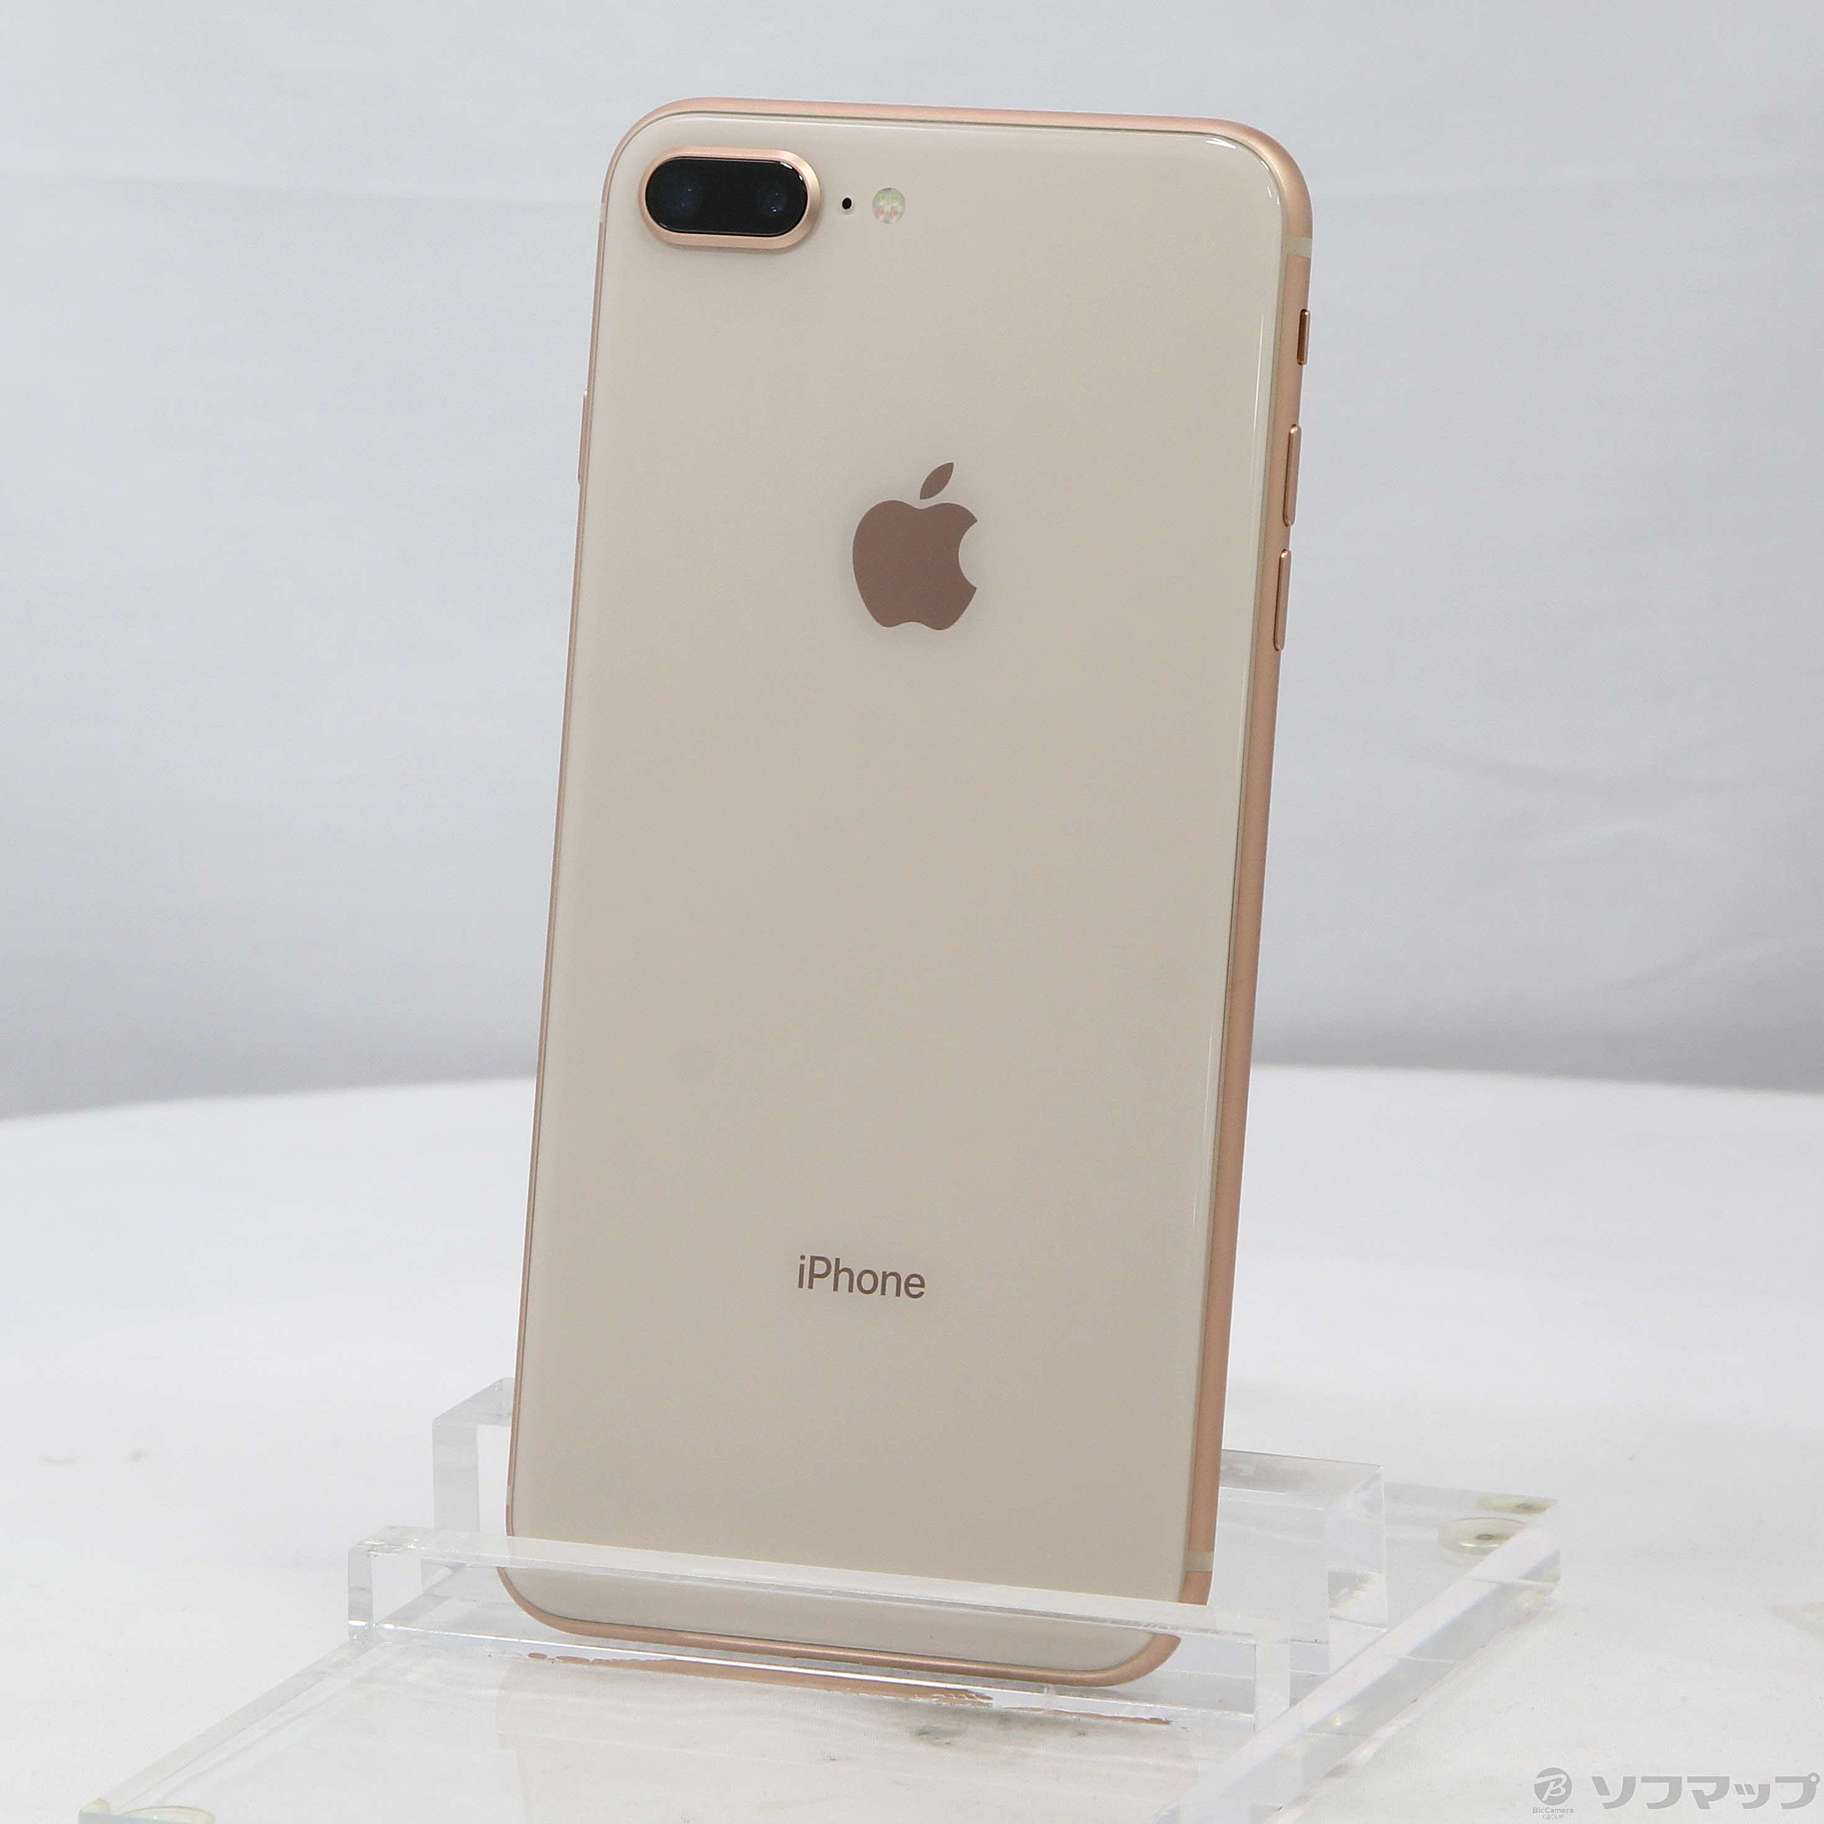 iPhone 8 Plus Gold 256 GB Softbank - スマートフォン本体